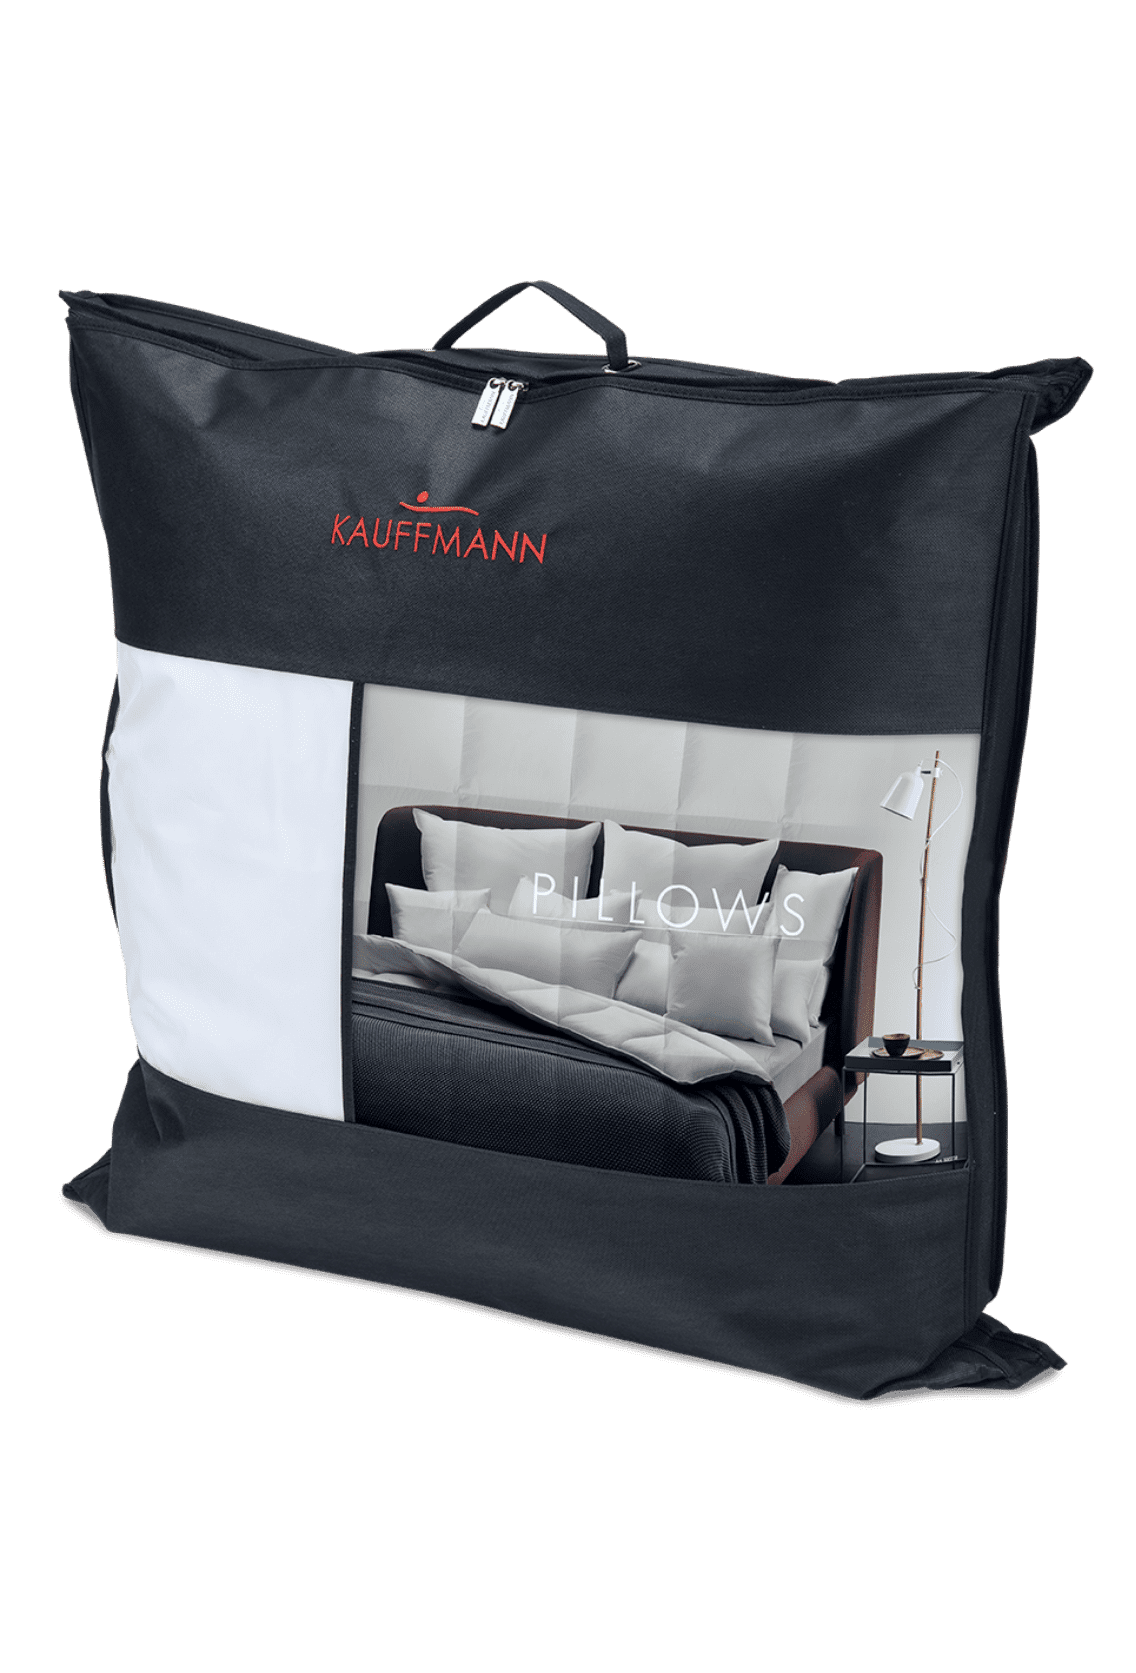 KAUFFMANN HOME TRIO PILLOW EDITION 3C carrying bag